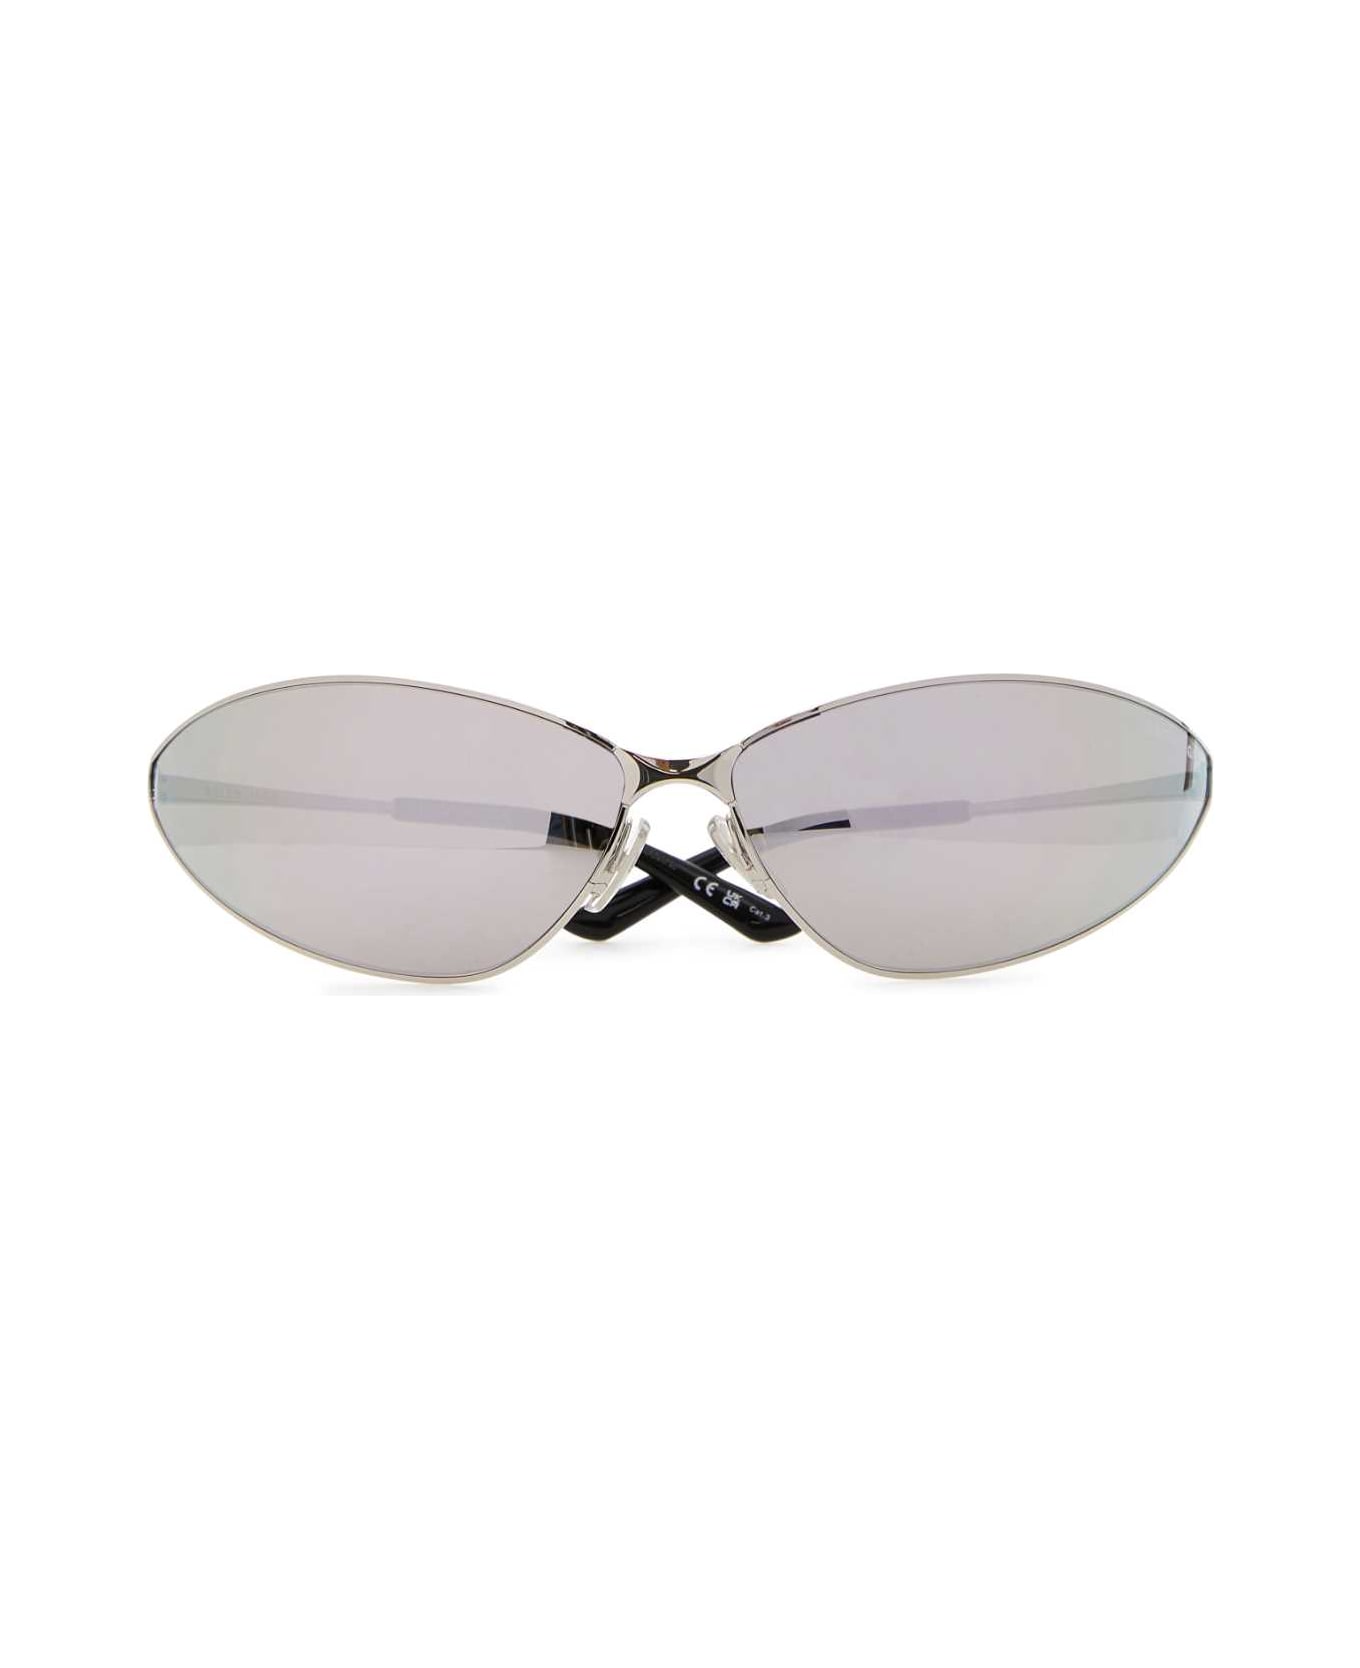 Balenciaga Silver Metal Razor Sunglasses - SILVER